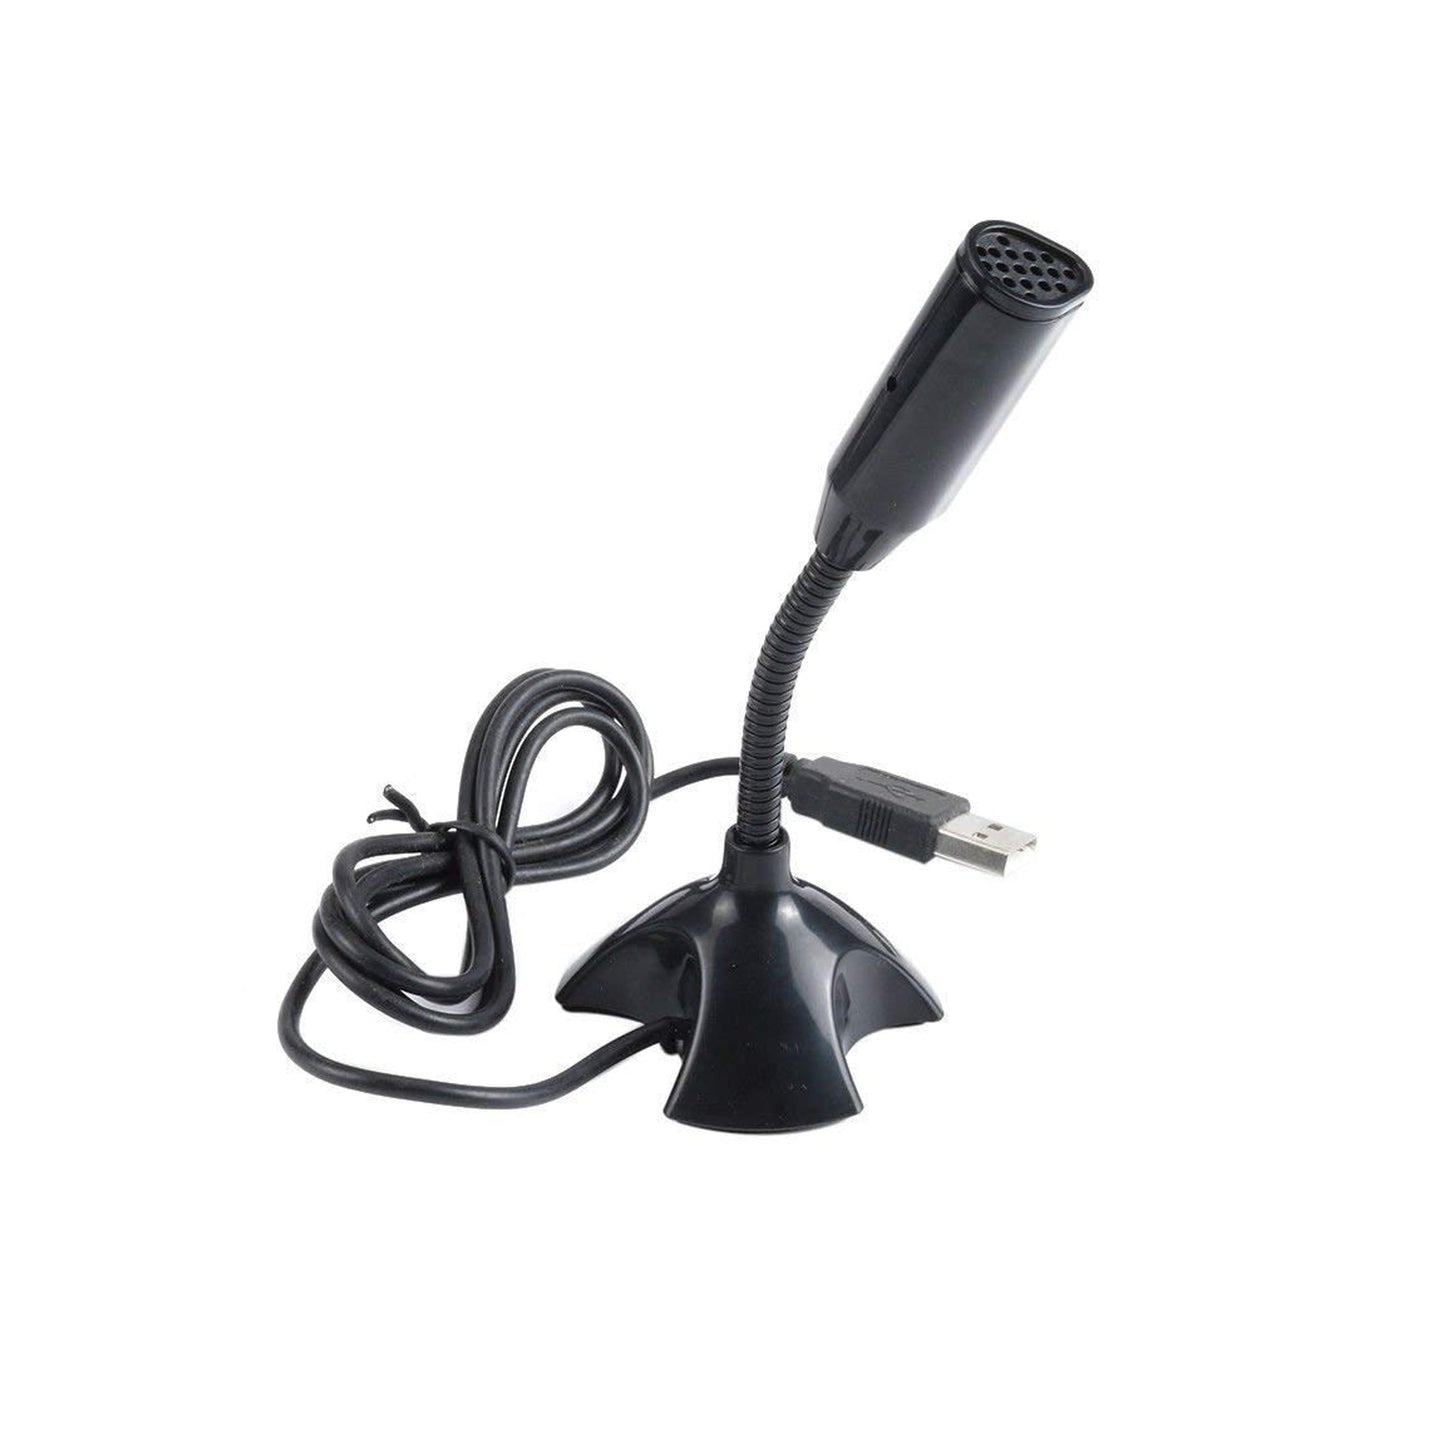 Raspberry Pi USB Plug and Play Desktop Microphone USB Mic USB Microphone - RS4808 - REES52